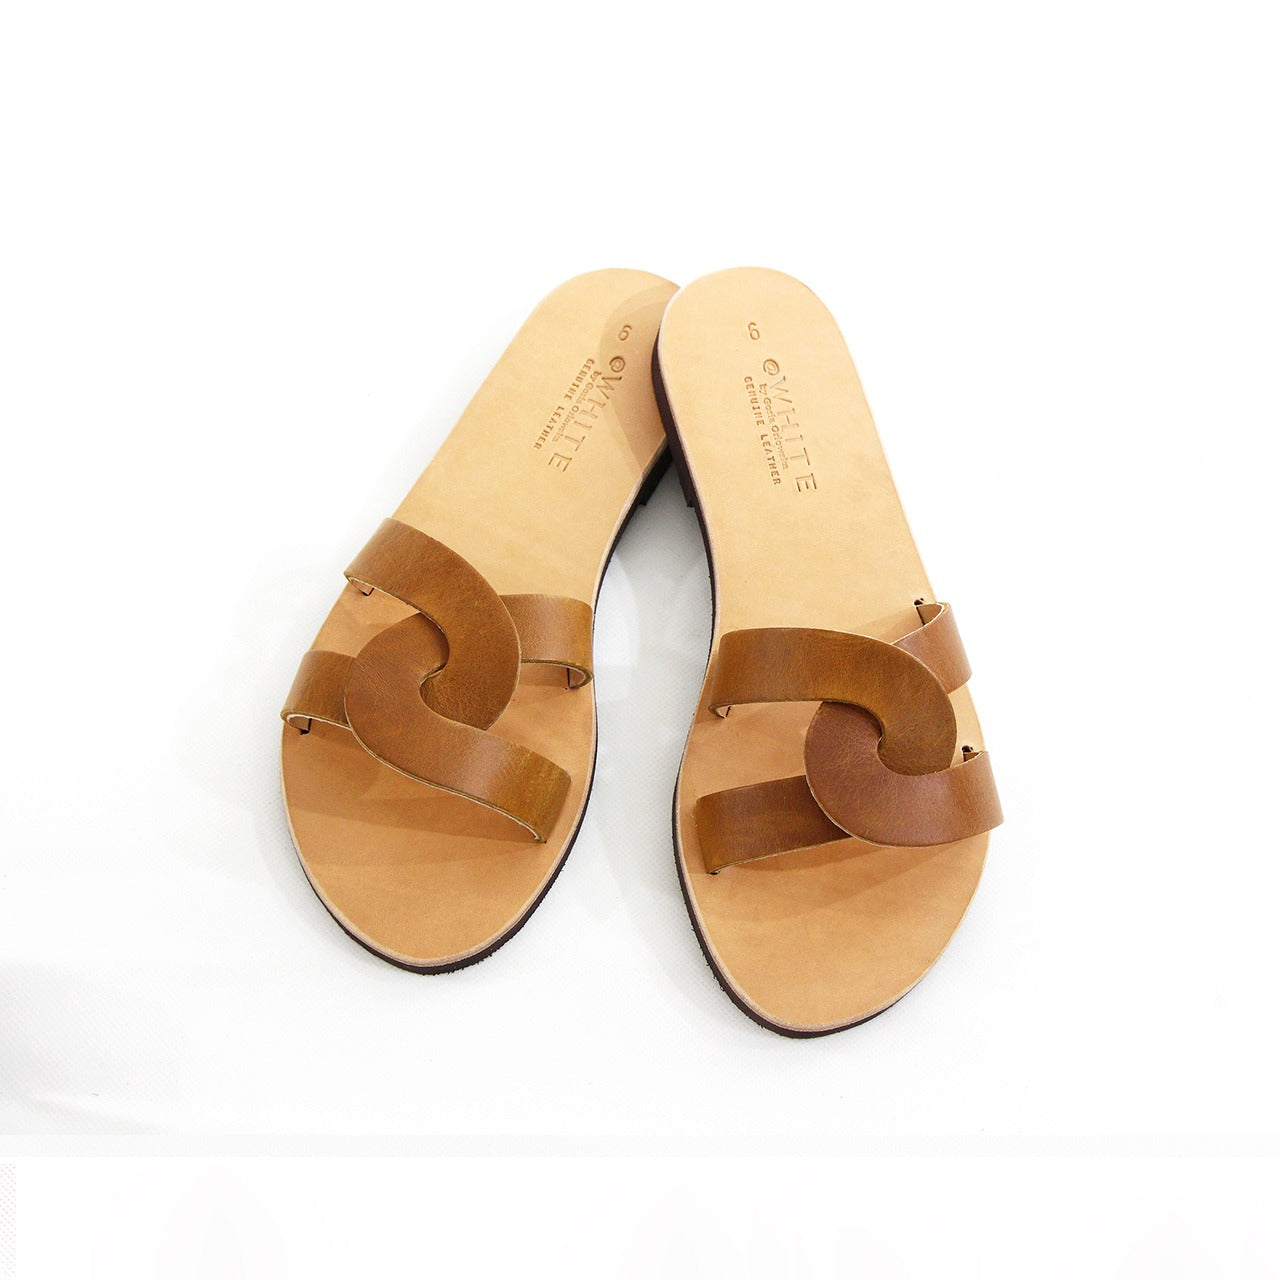 Stylish Tan Leather Sandals by Gosia Orlowska